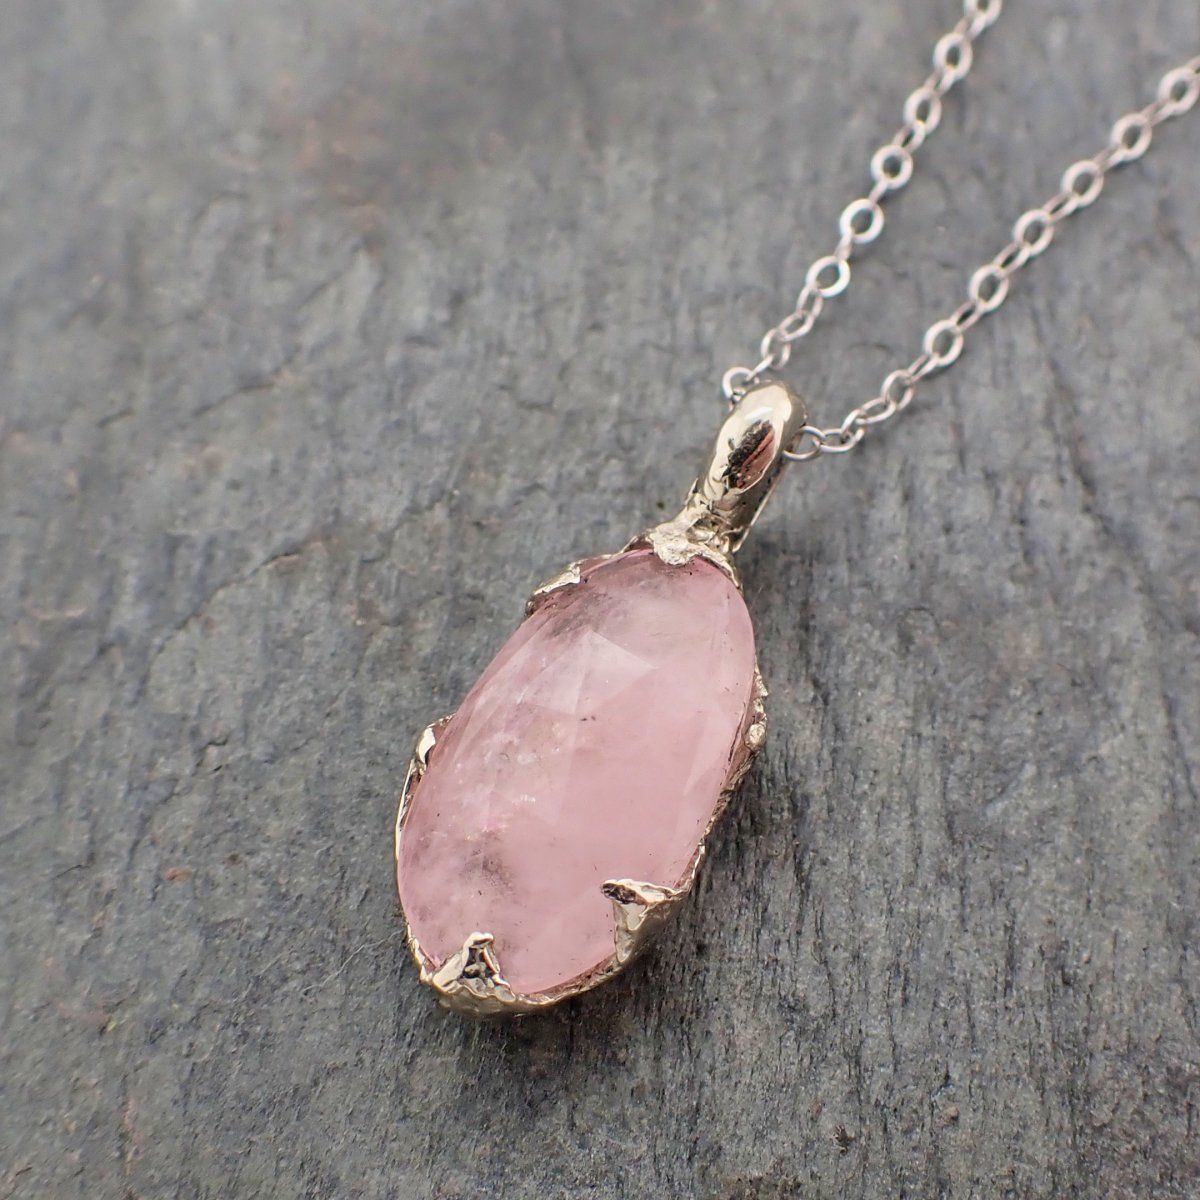 Fancy cut Morganite 14k white gold Pendant pink Gemstone Necklace 2234